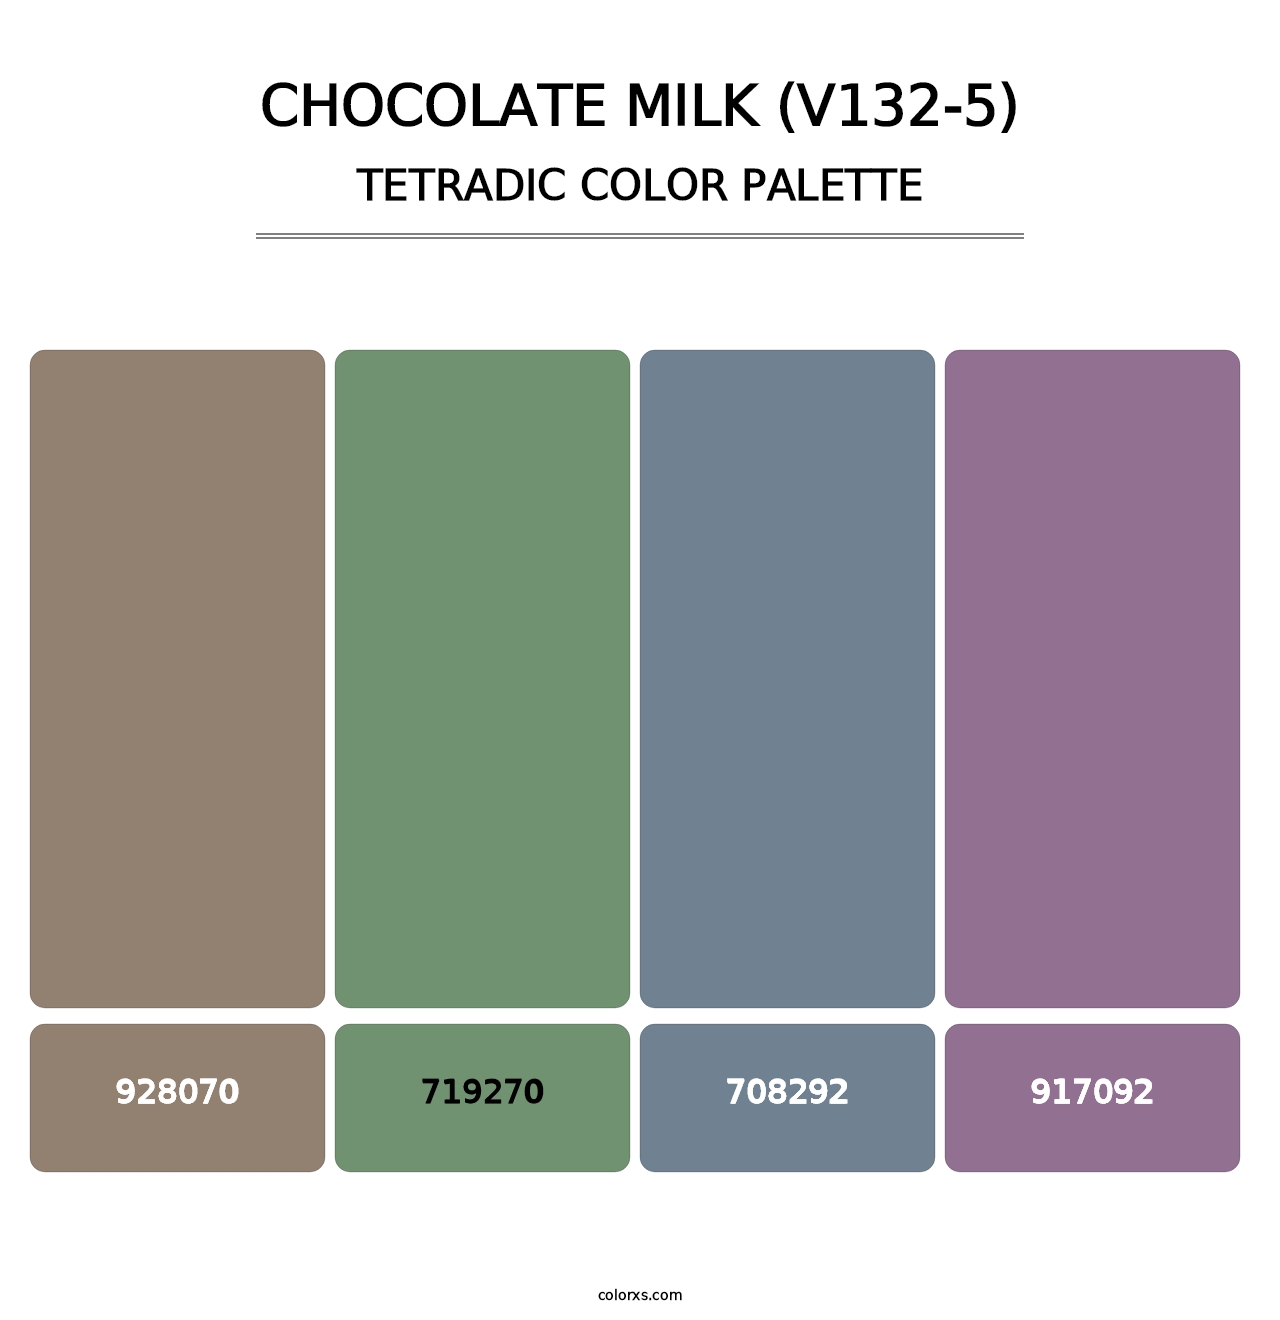 Chocolate Milk (V132-5) - Tetradic Color Palette